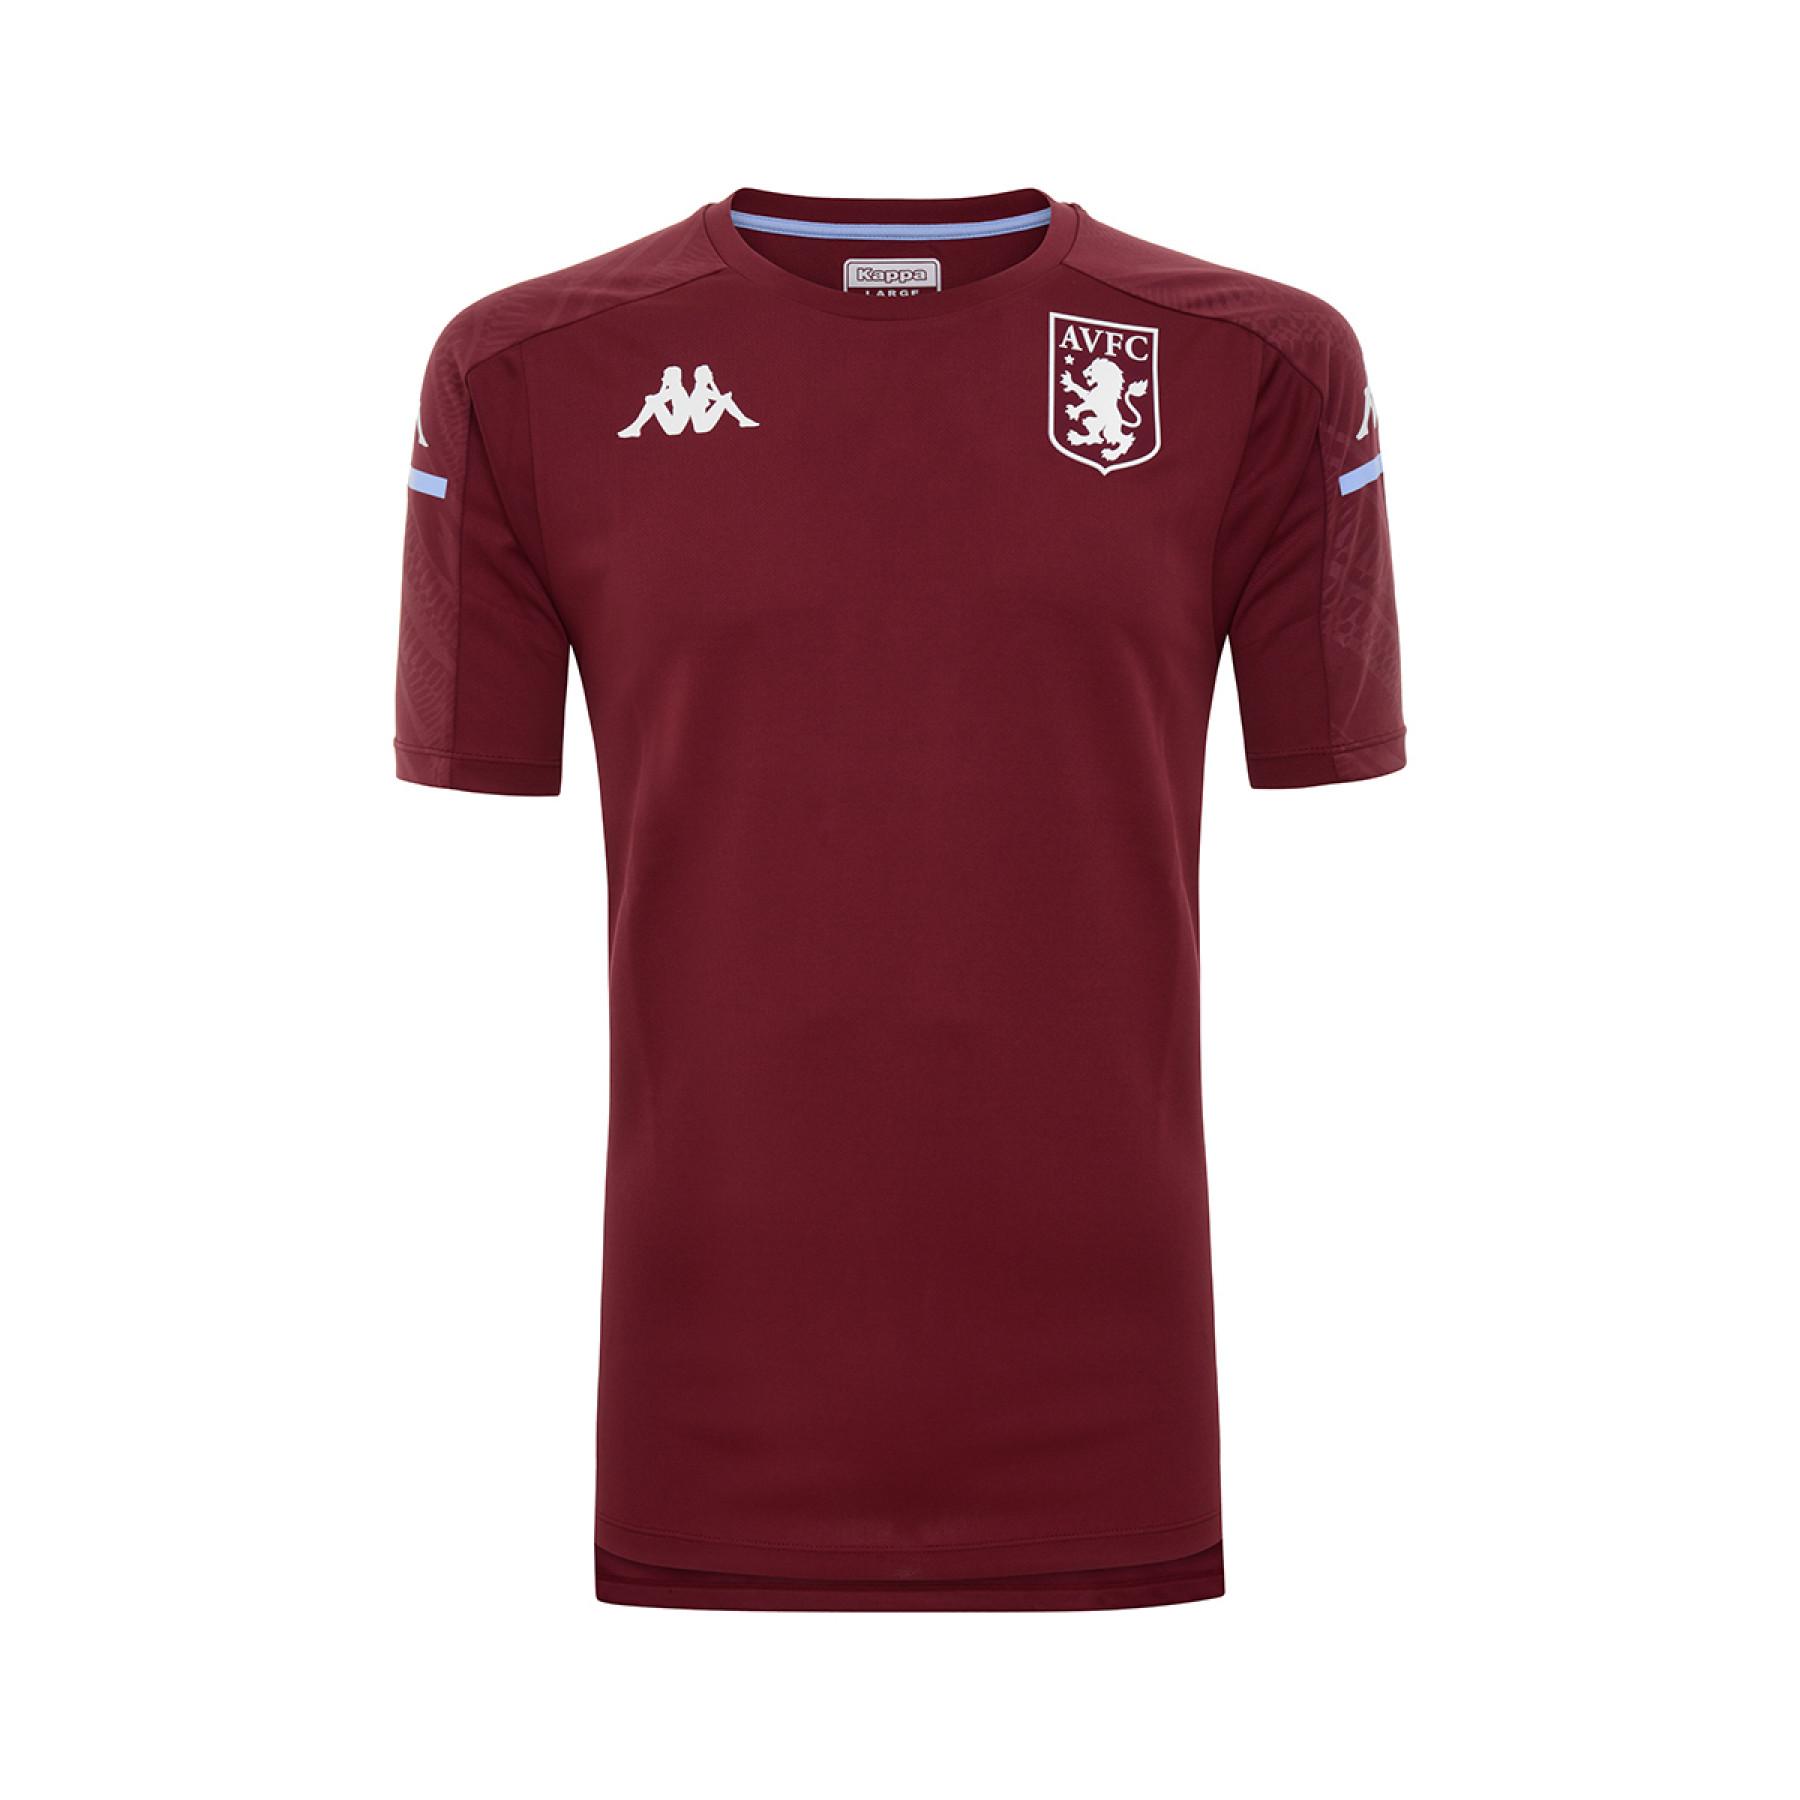 Camiseta niños Aston Villa FC 2020/21 aboes pro 4